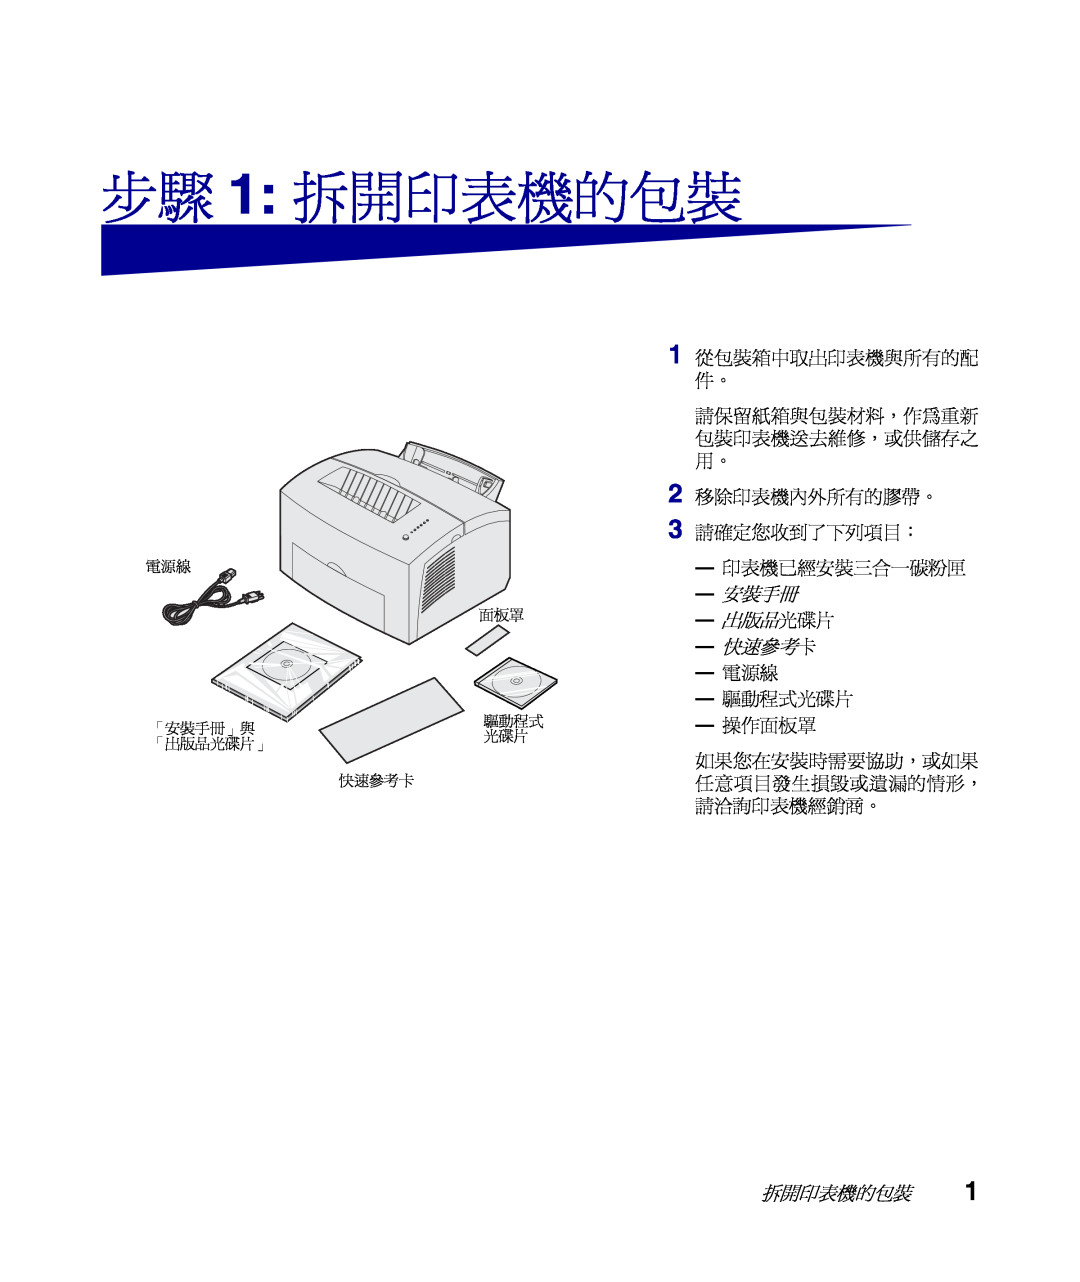 Lexmark Infoprint 1116 步驟 1 拆開印表機的包裝, 移除印表機內外所有的膠帶。 請確定您收到了下列項目： 印表機已經安裝三合一碳粉匣, 安裝手冊 出版品光碟片 快速參考卡, 1 從包裝箱中取出印表機與所有的配 件。 